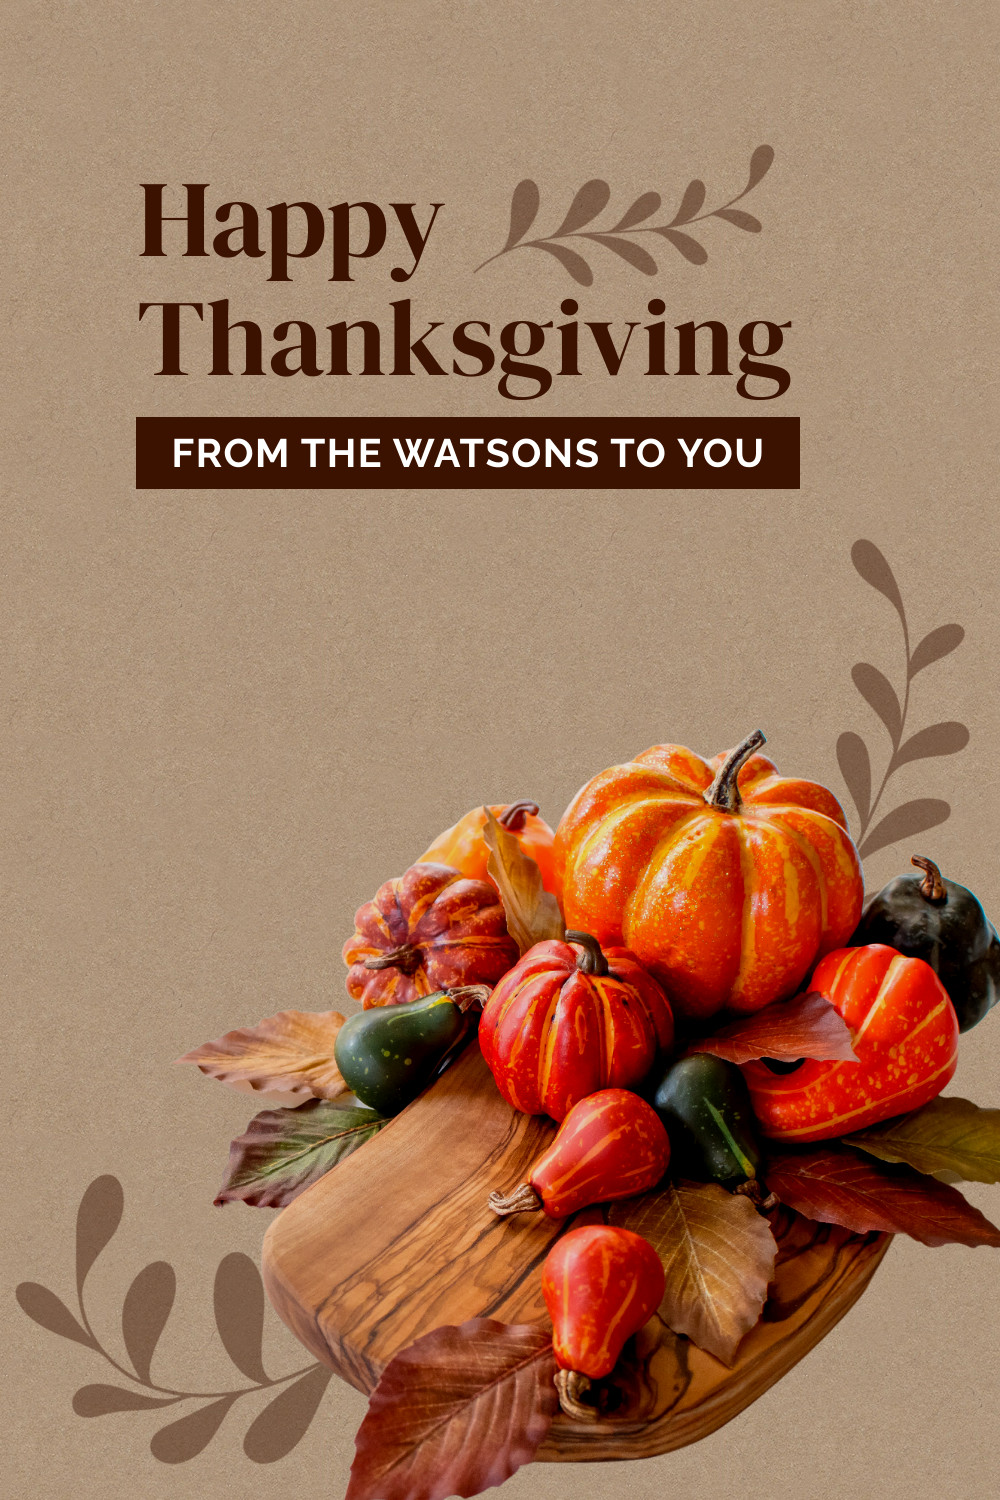 Rustic Pumpkin Thanksgiving Card Facebook Cover 820x360